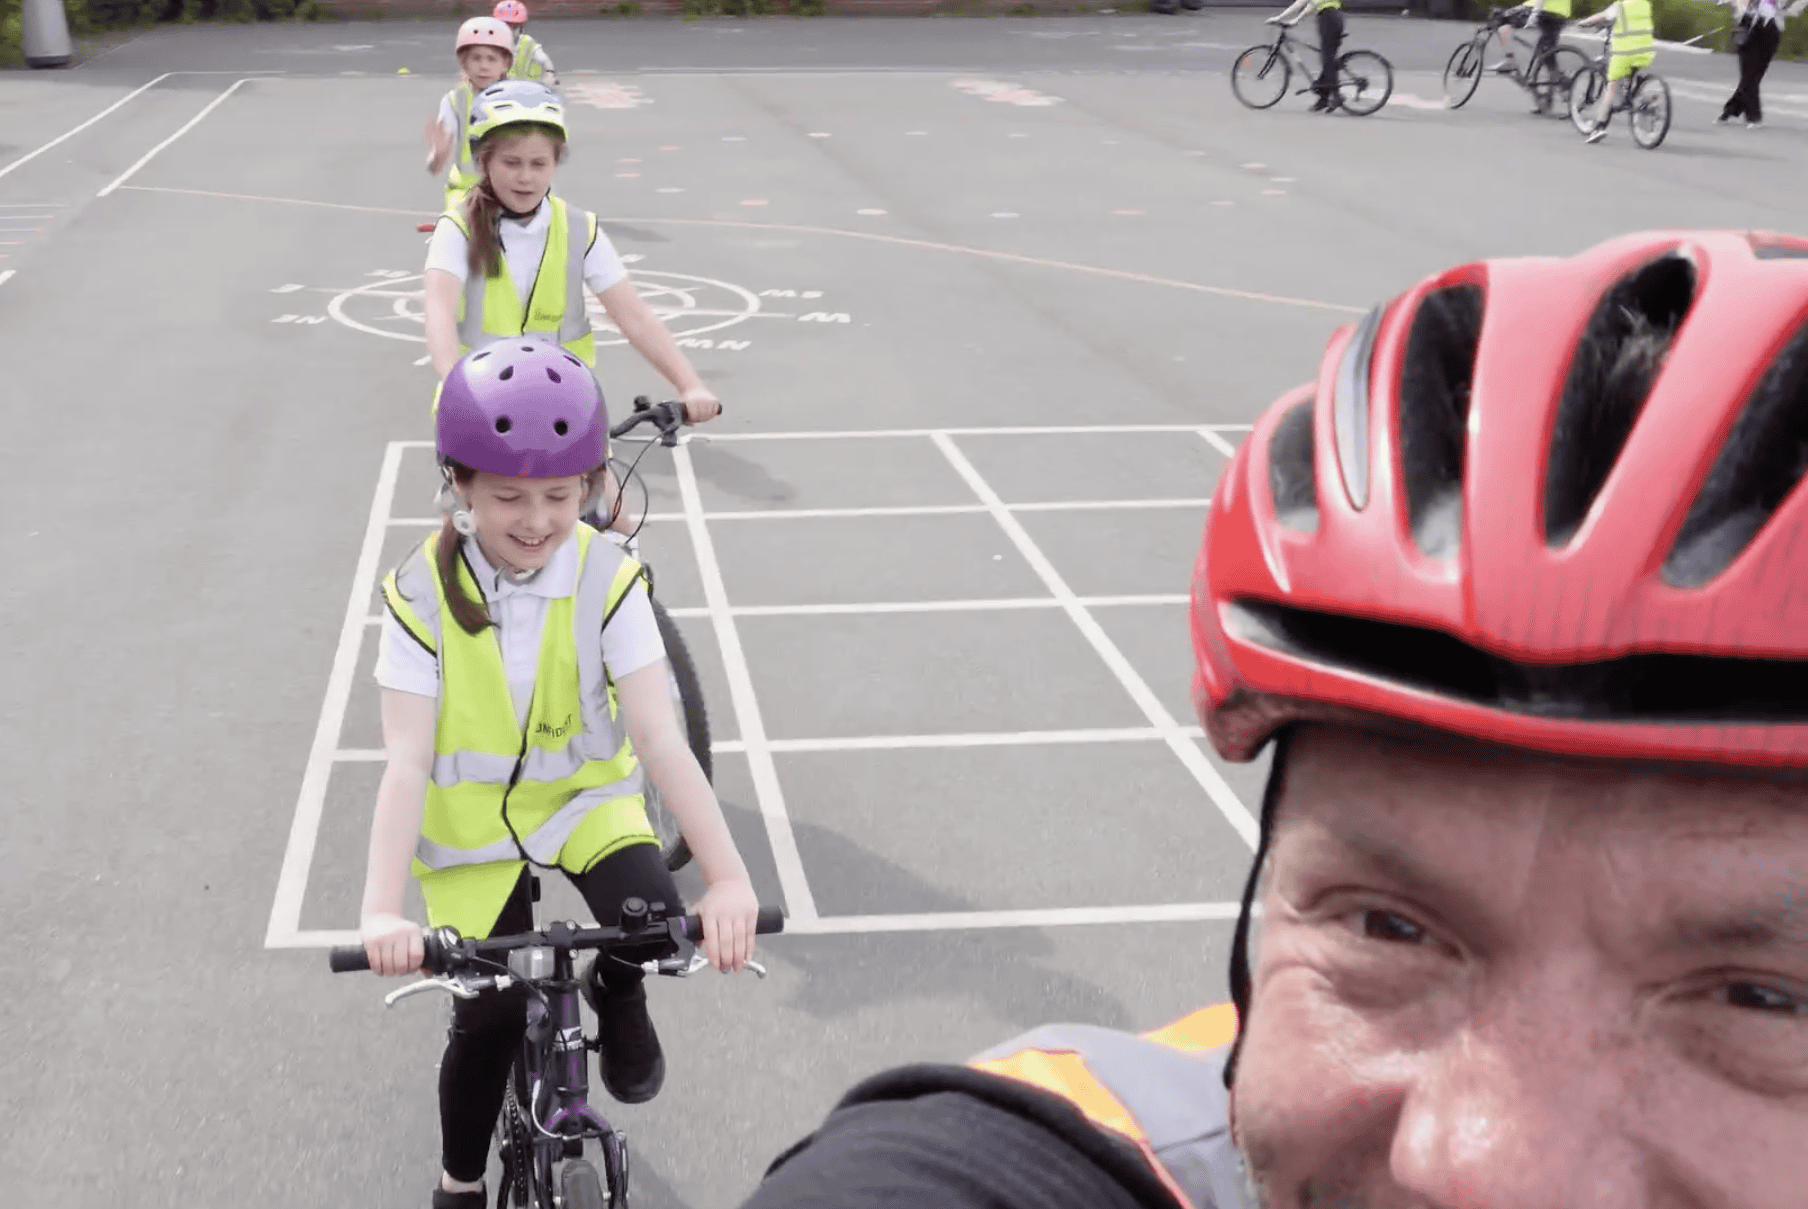 Children and staff riding bikes